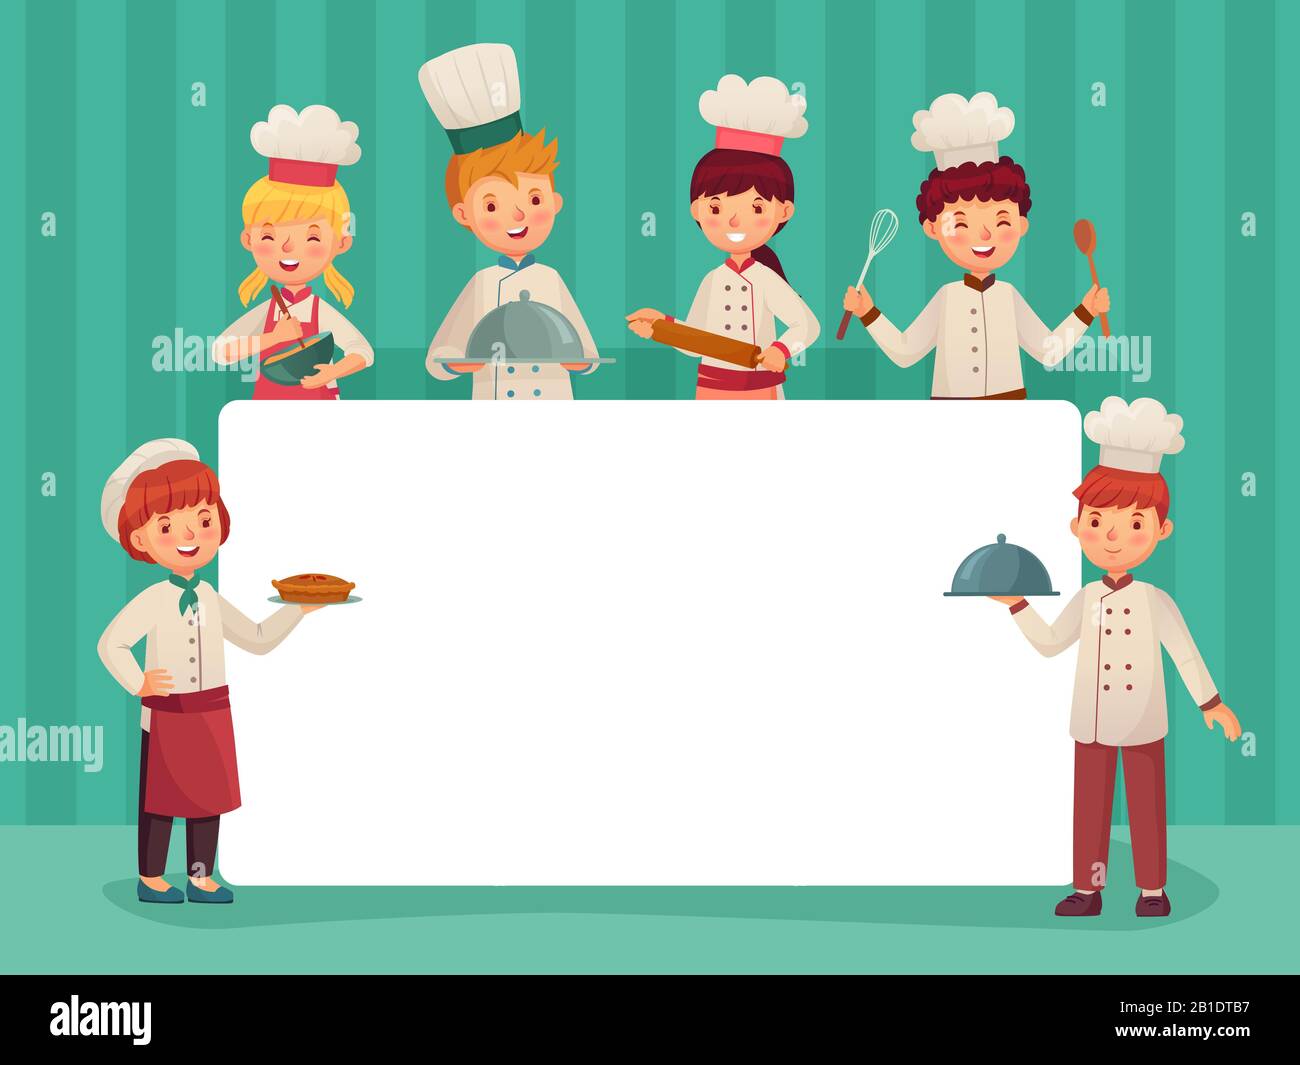 Kids chefs frame. Children cooks, little chef cooking food and restaurant kitchen students cartoon vector illustration Stock Vector